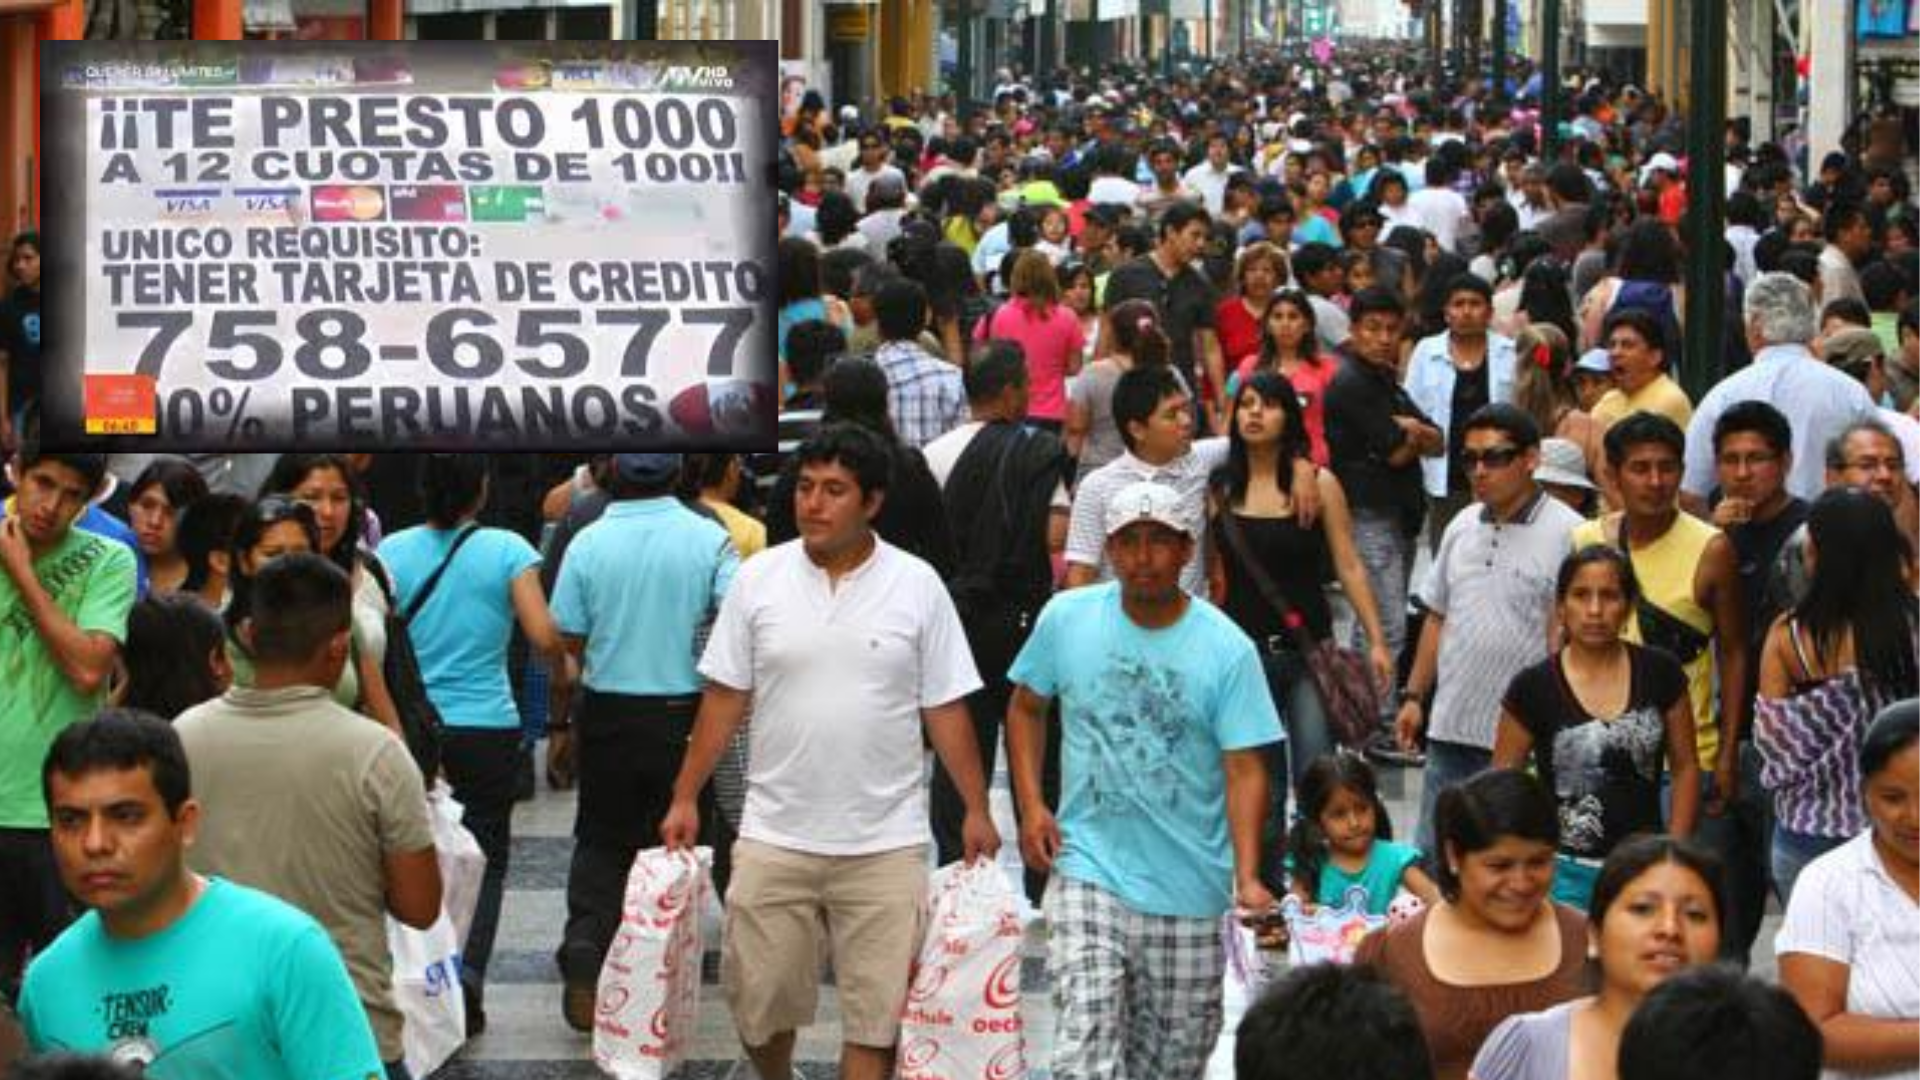 Medio millón de peruanos estarían siendo amenazados de muerte tras solicitar préstamos “gota a gota”.